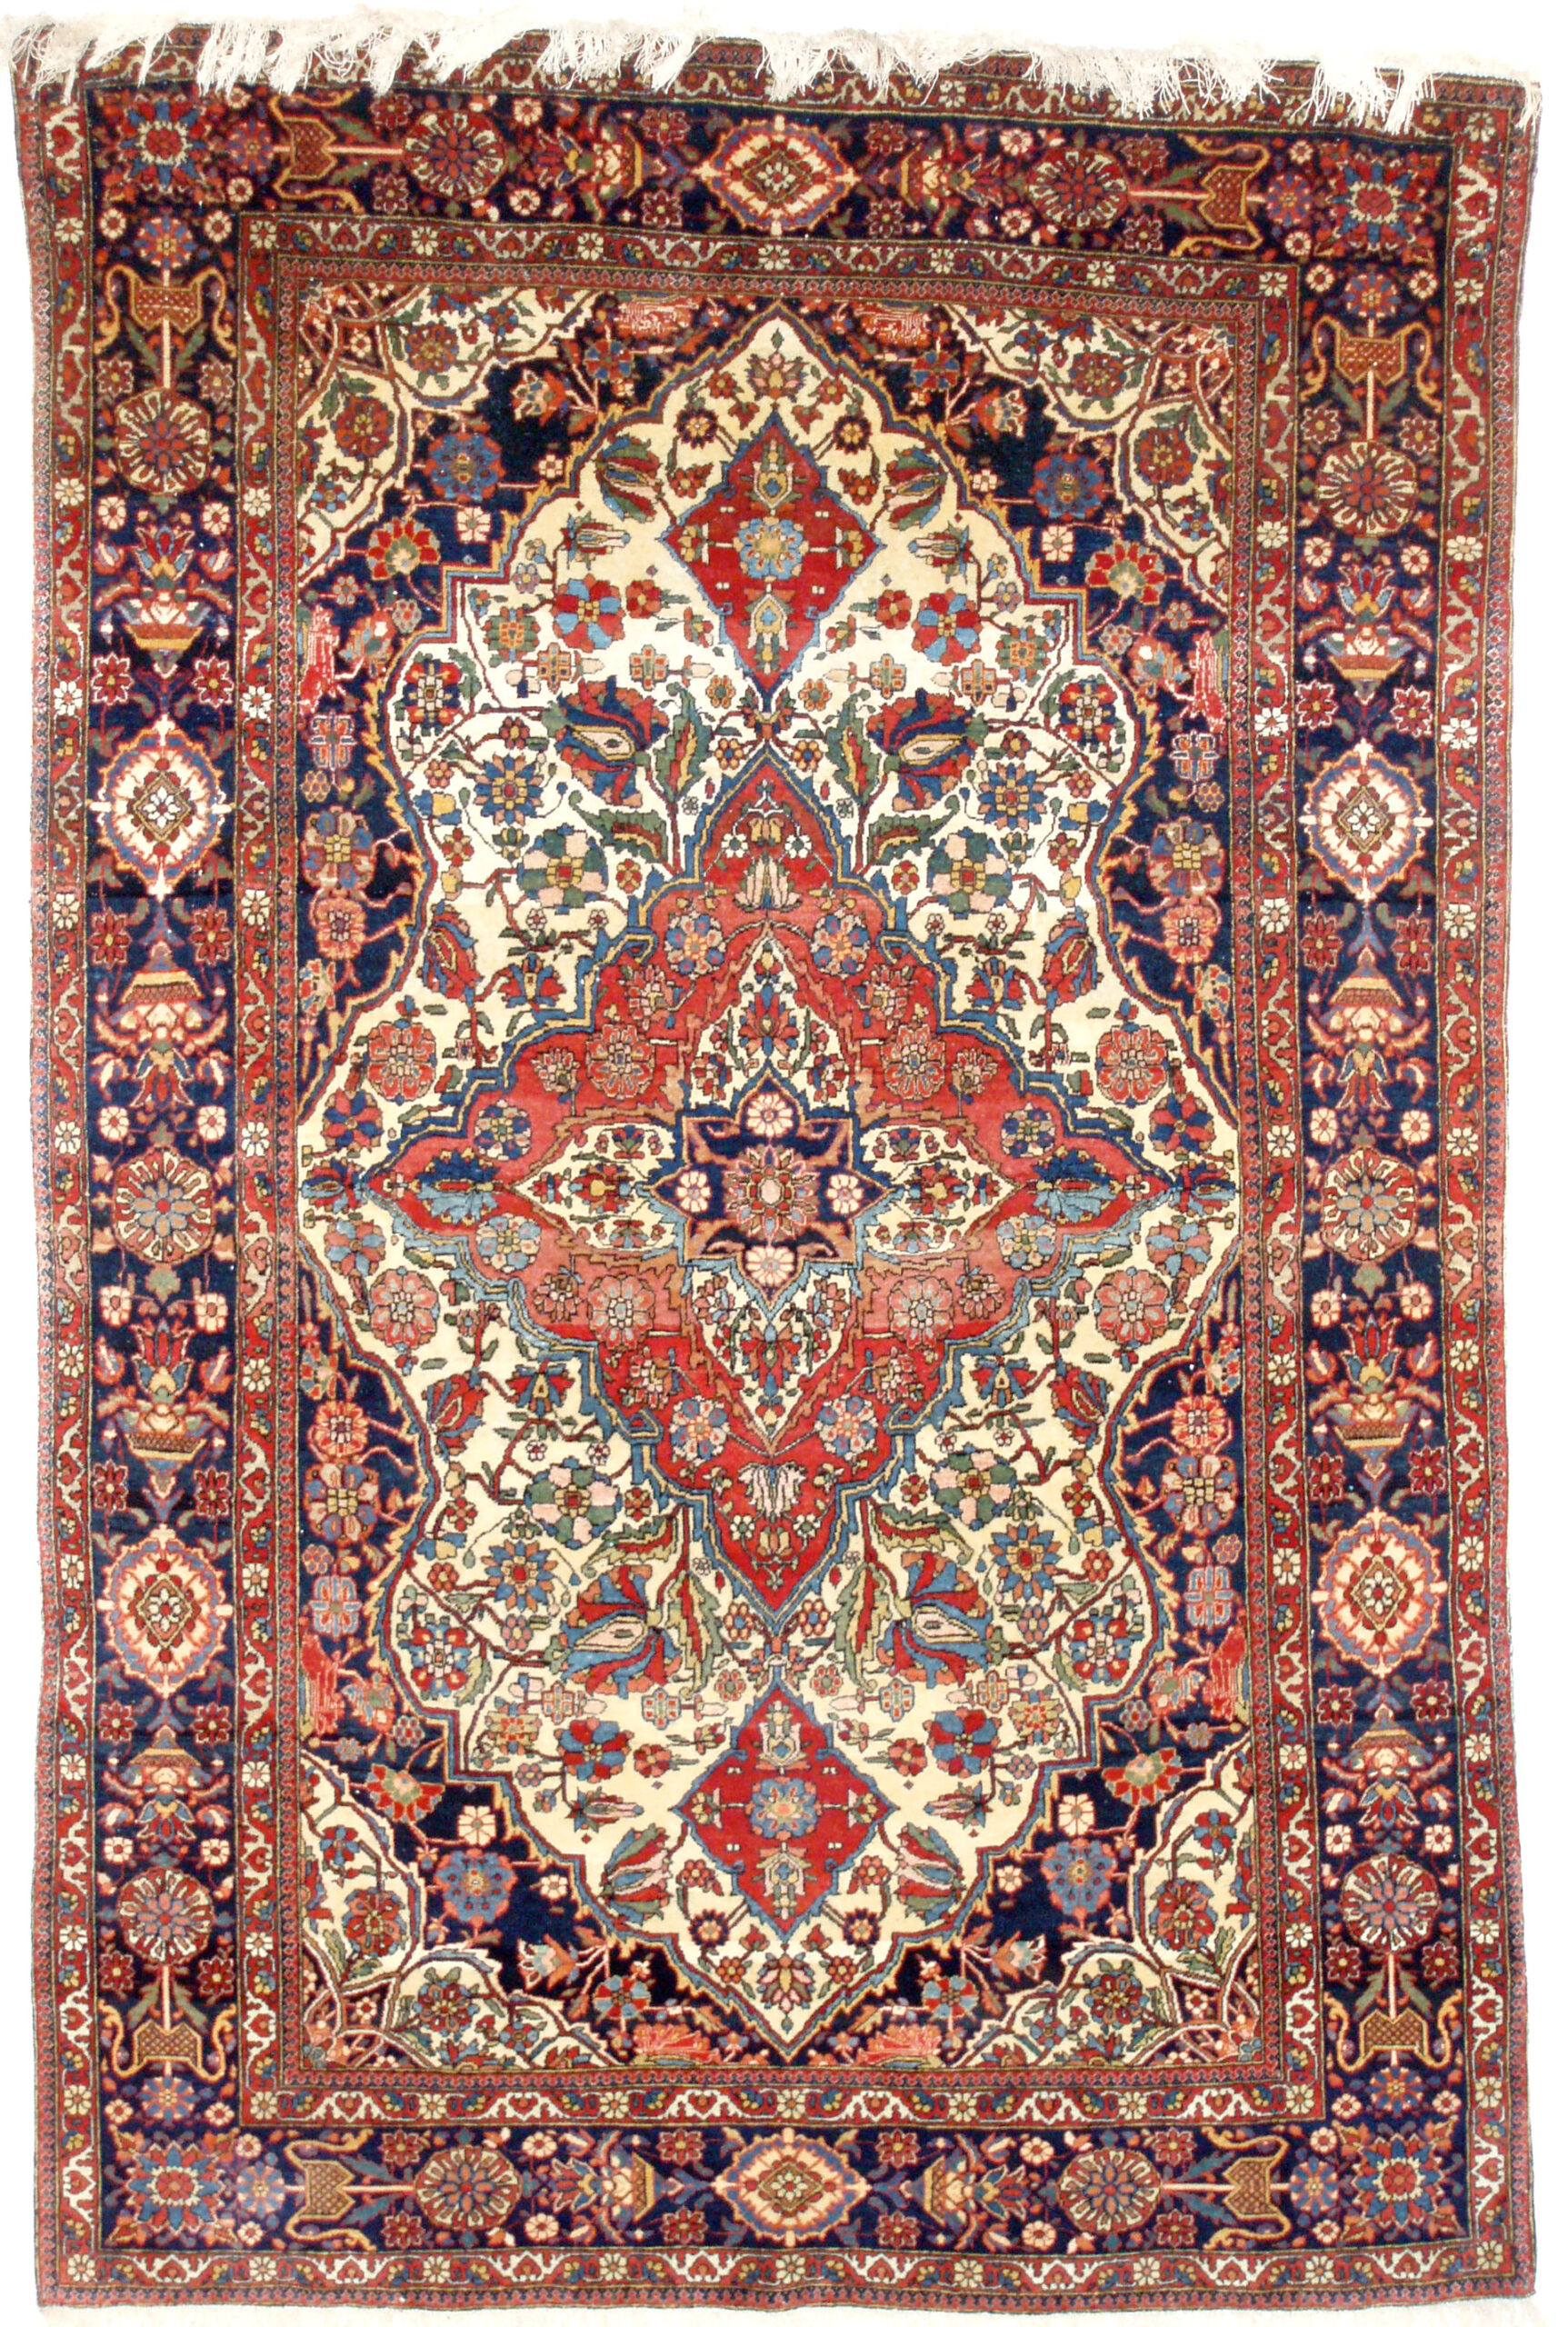 Antique Mohtasham Kashan rug, central Persia, circa 1900 - Douglas Stock Gallery, antique rugs Boston,MA area New England